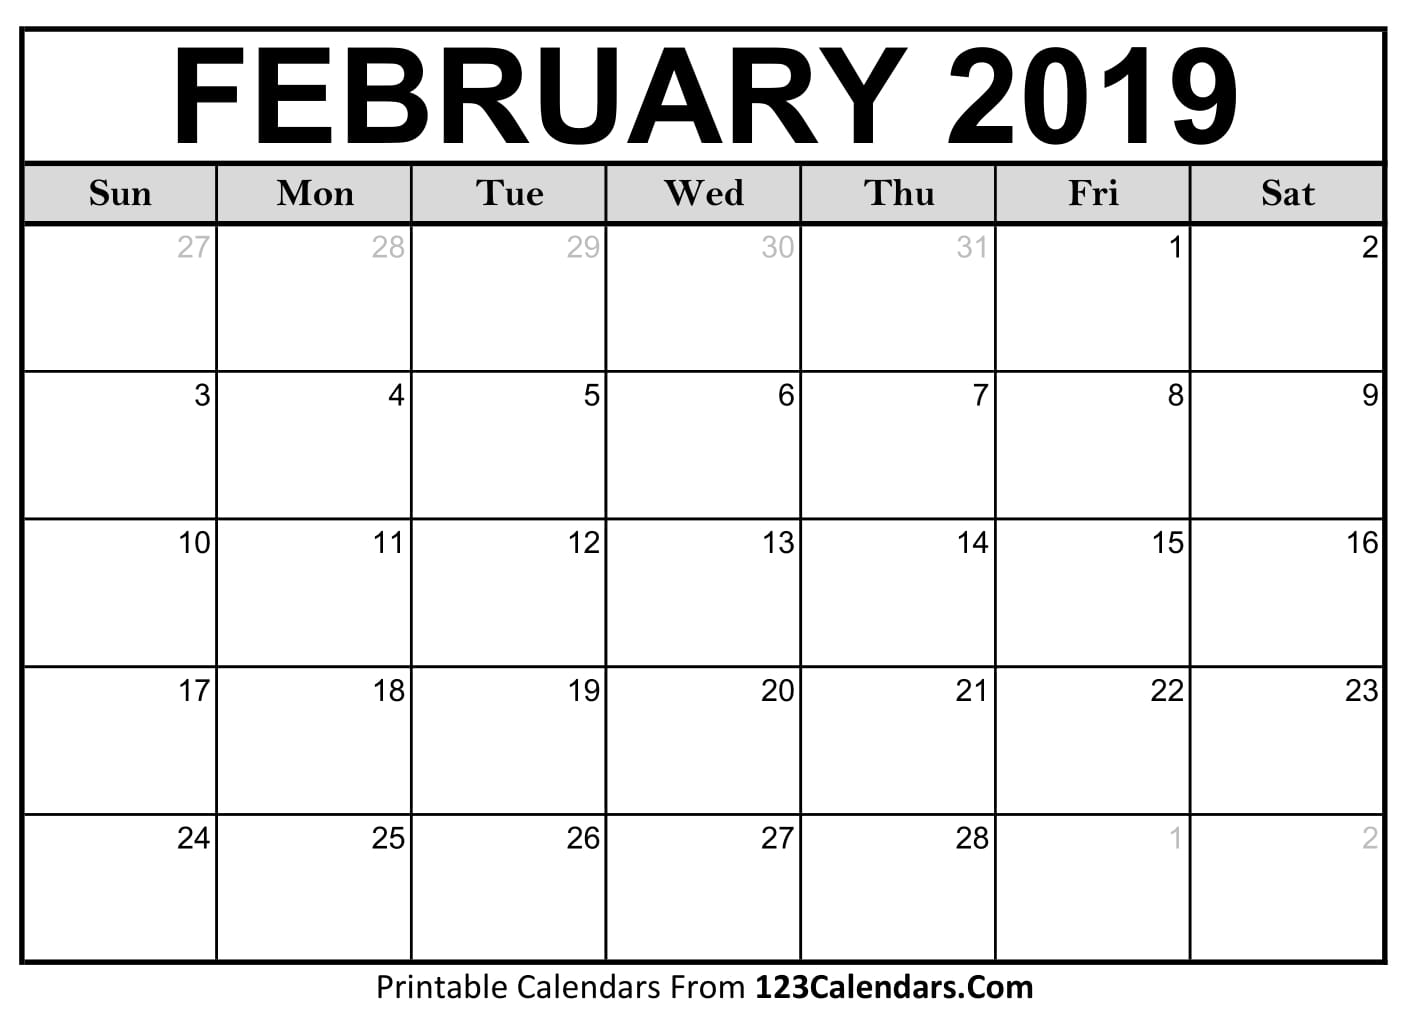 February 2019 Calendar (Blank) Easily Printable 123Calendars